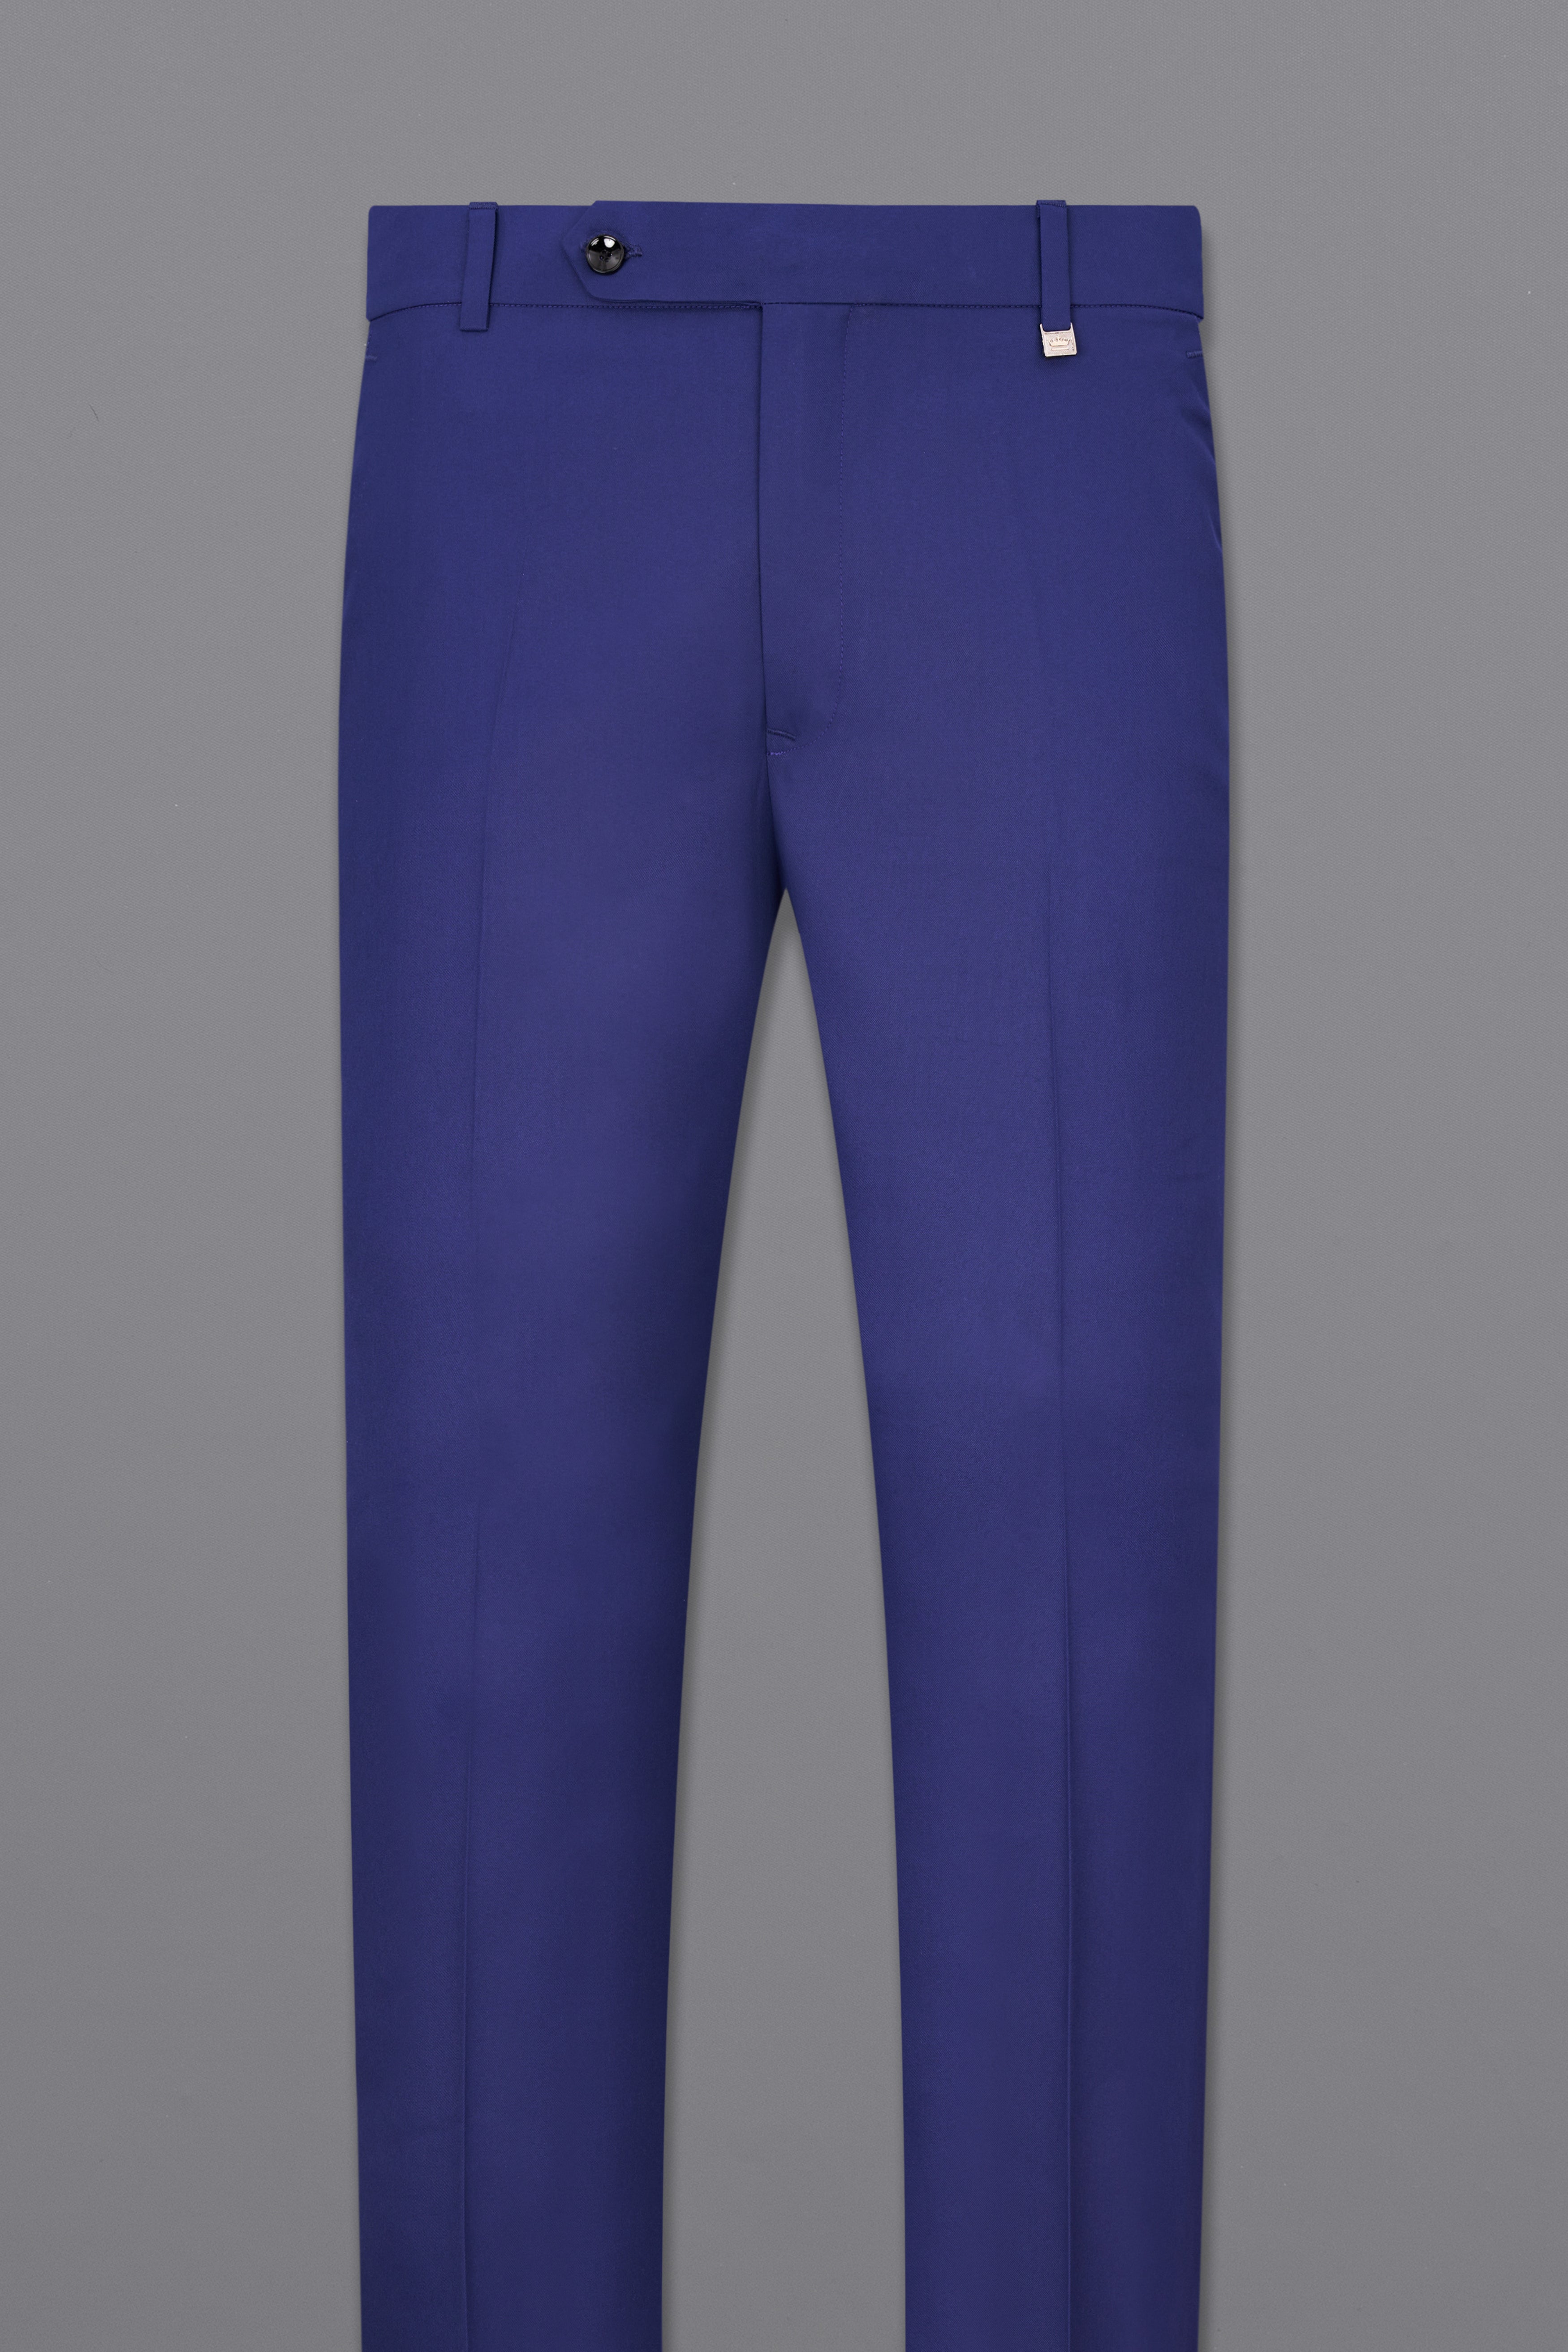 Reiss Wool Flat-Front Dress Pants Pants for Men | Mercari